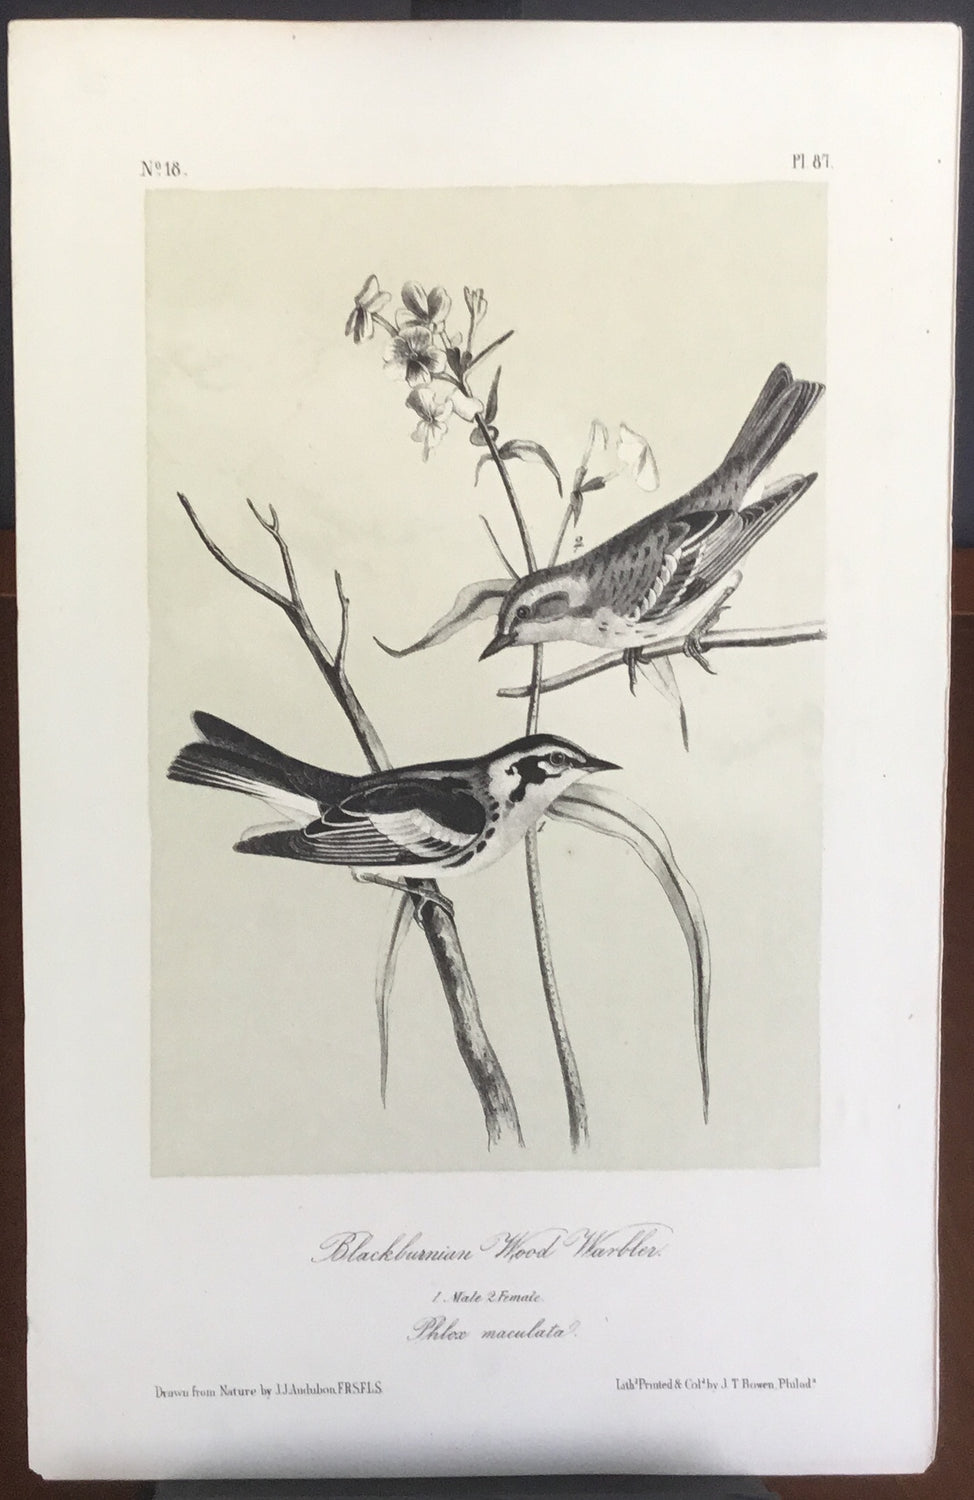 Audubon Octavo Blackburnian Wood Warbler (2), plate 81, uncolored test sheet, 7 x 11